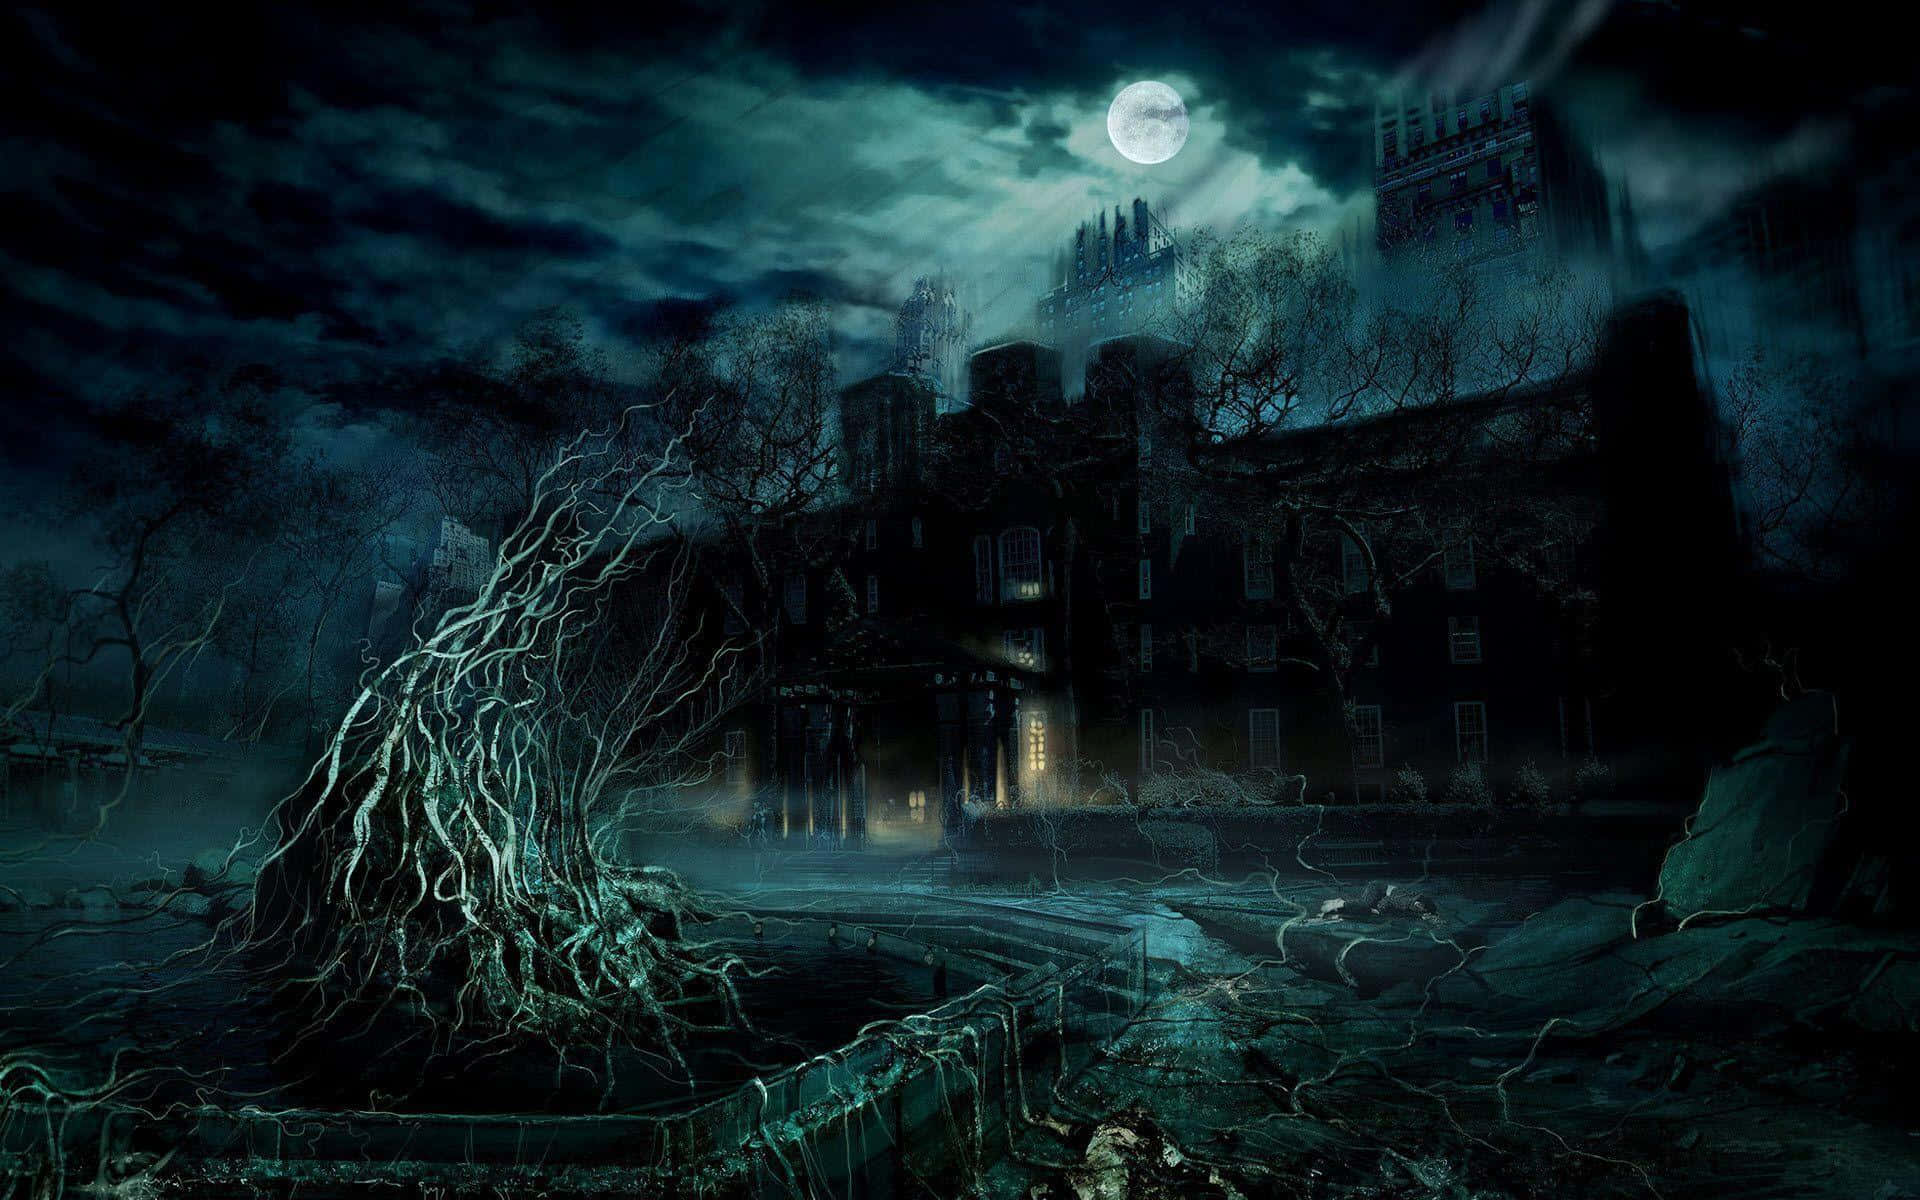 A Creepy Castle From The Dark Netflix Original Wallpaper